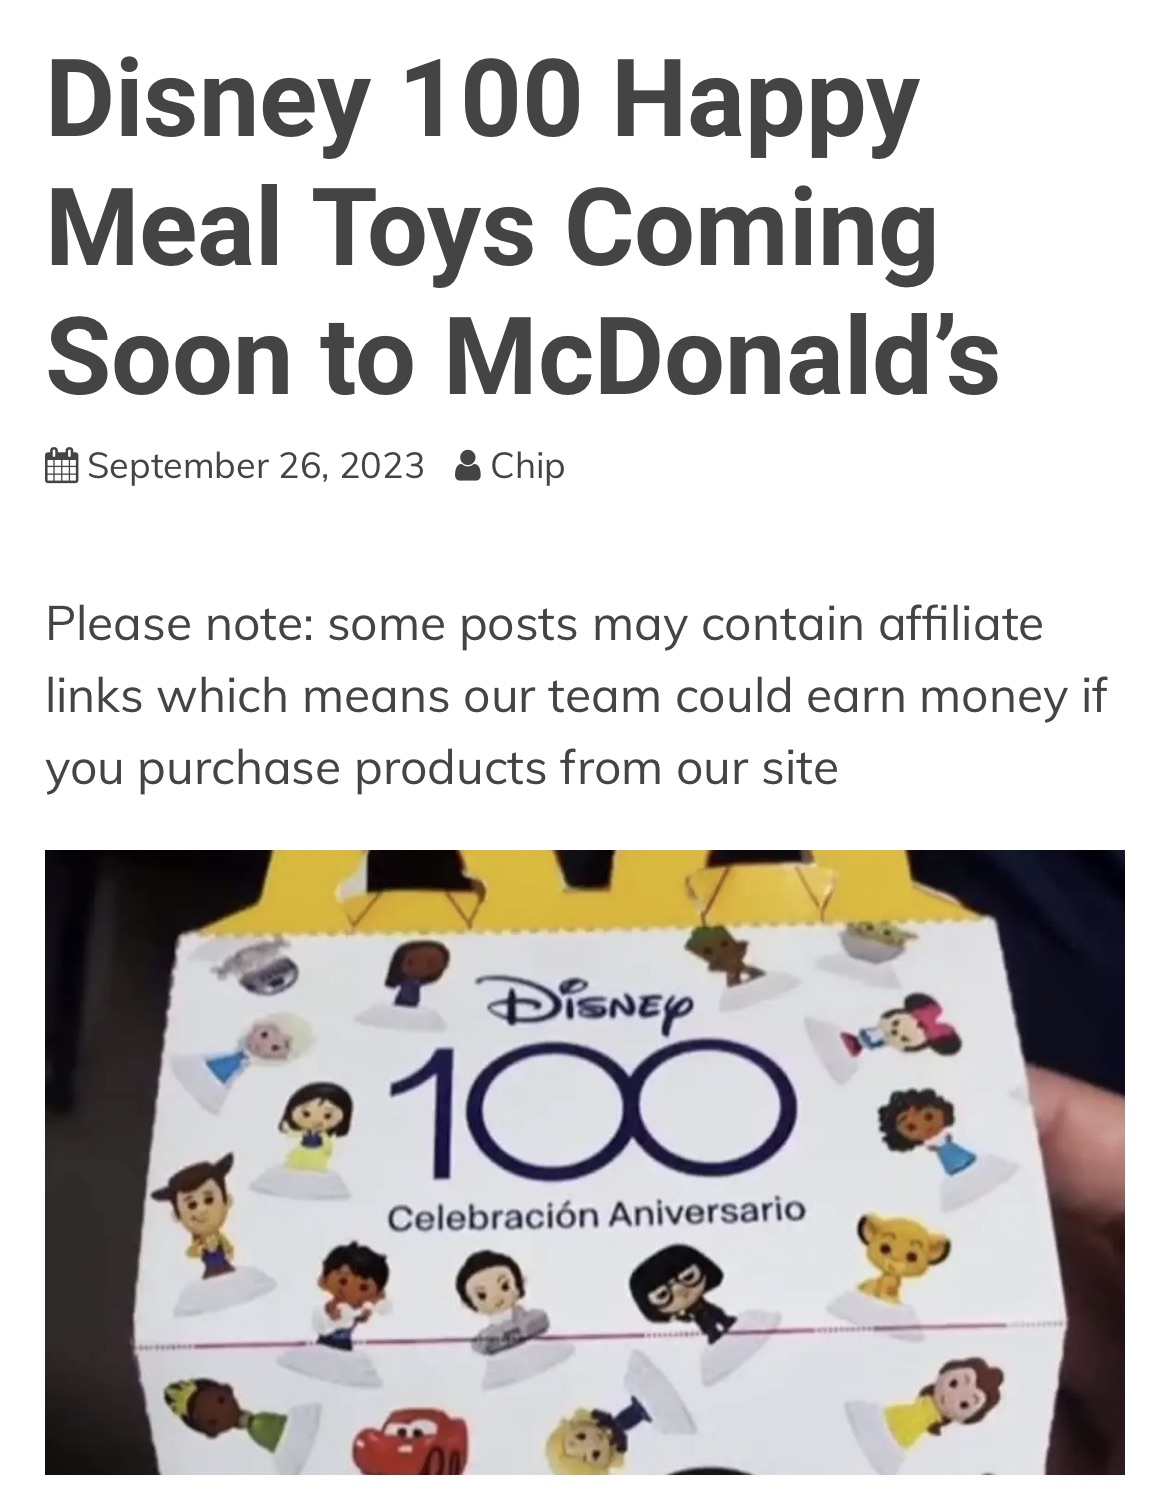 麦当劳套餐玩具预告：Disney 100 Happy Meal Toys